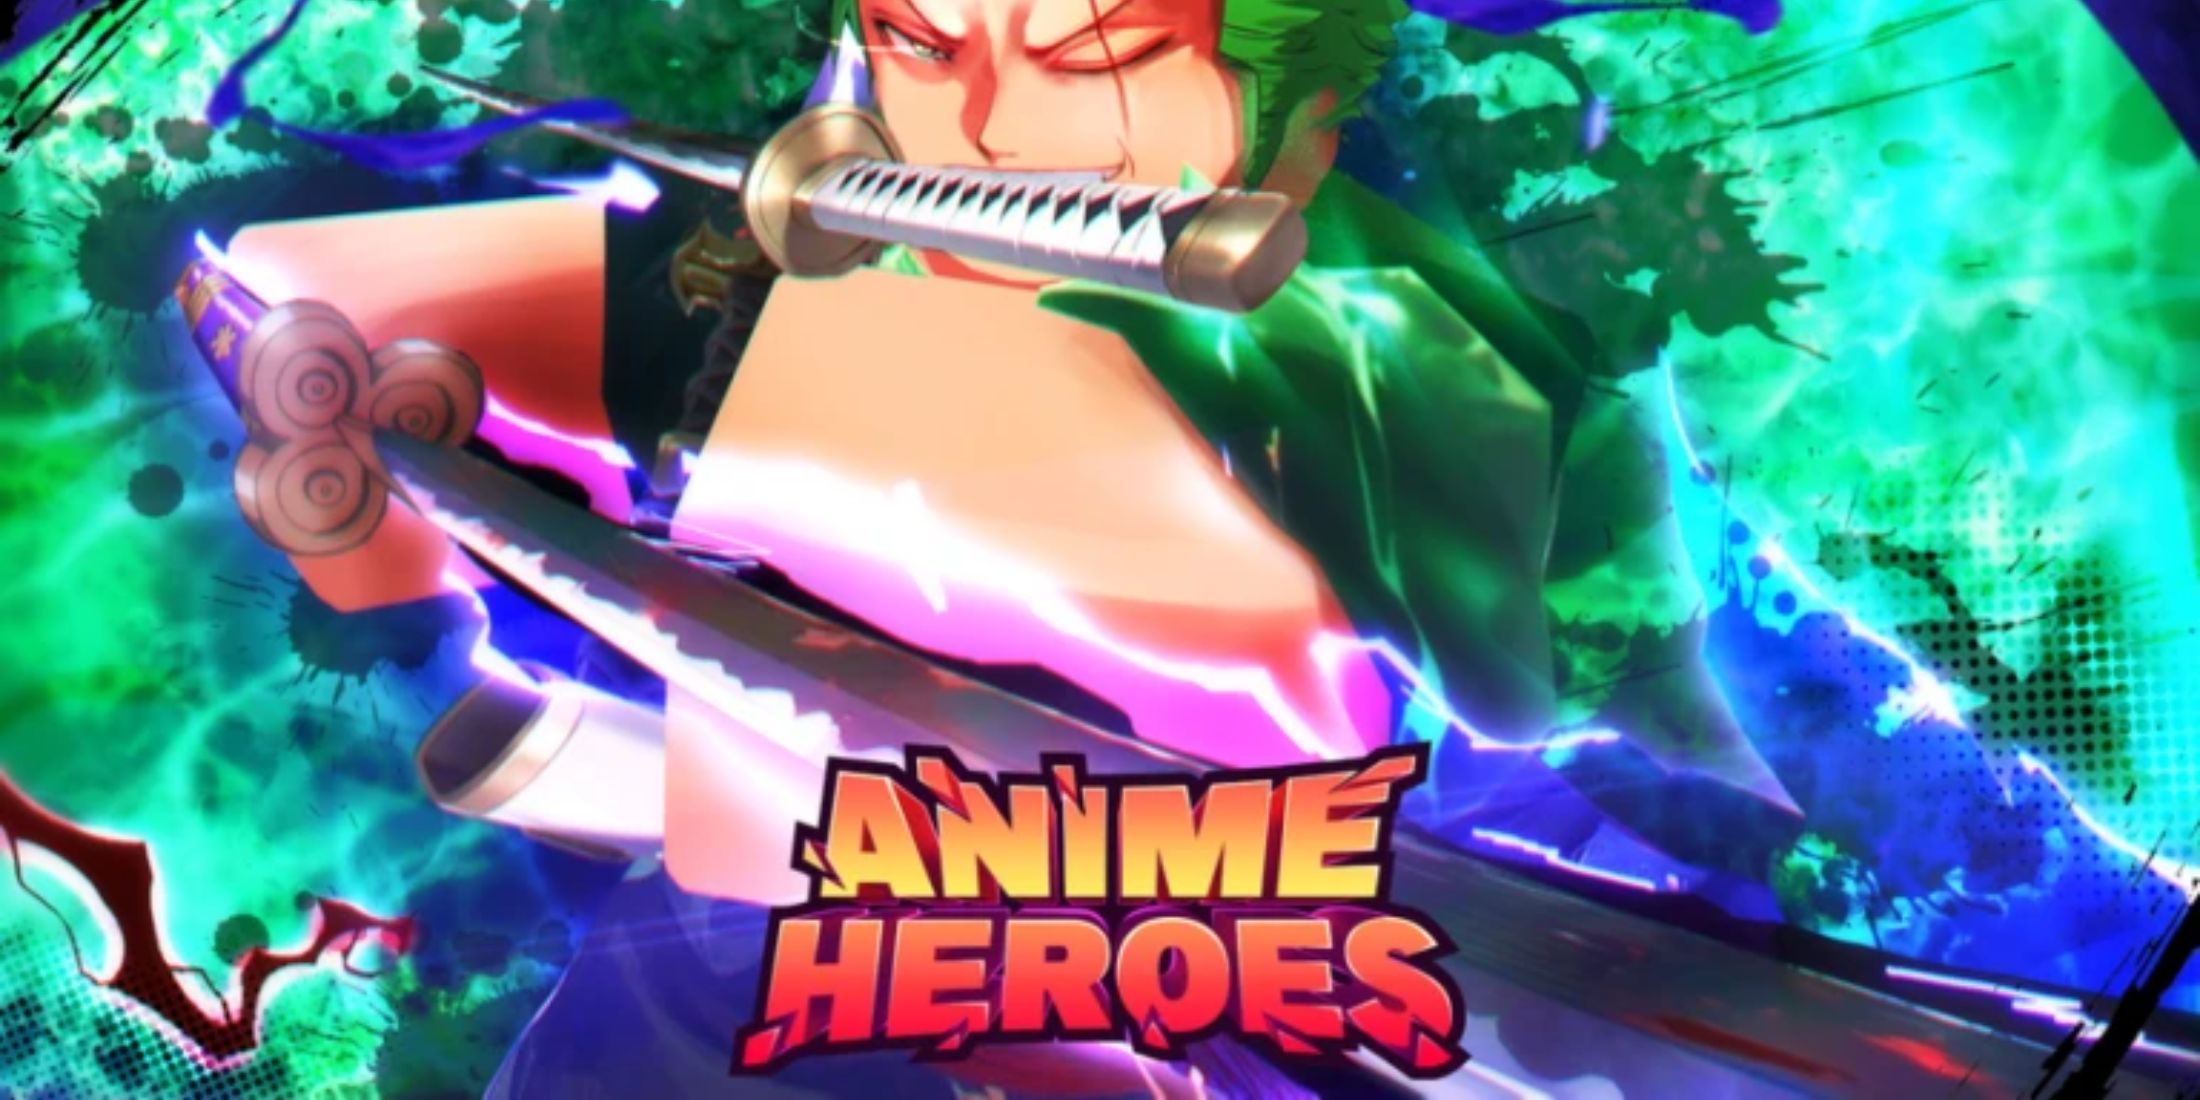 Anime Heroes Simulator character